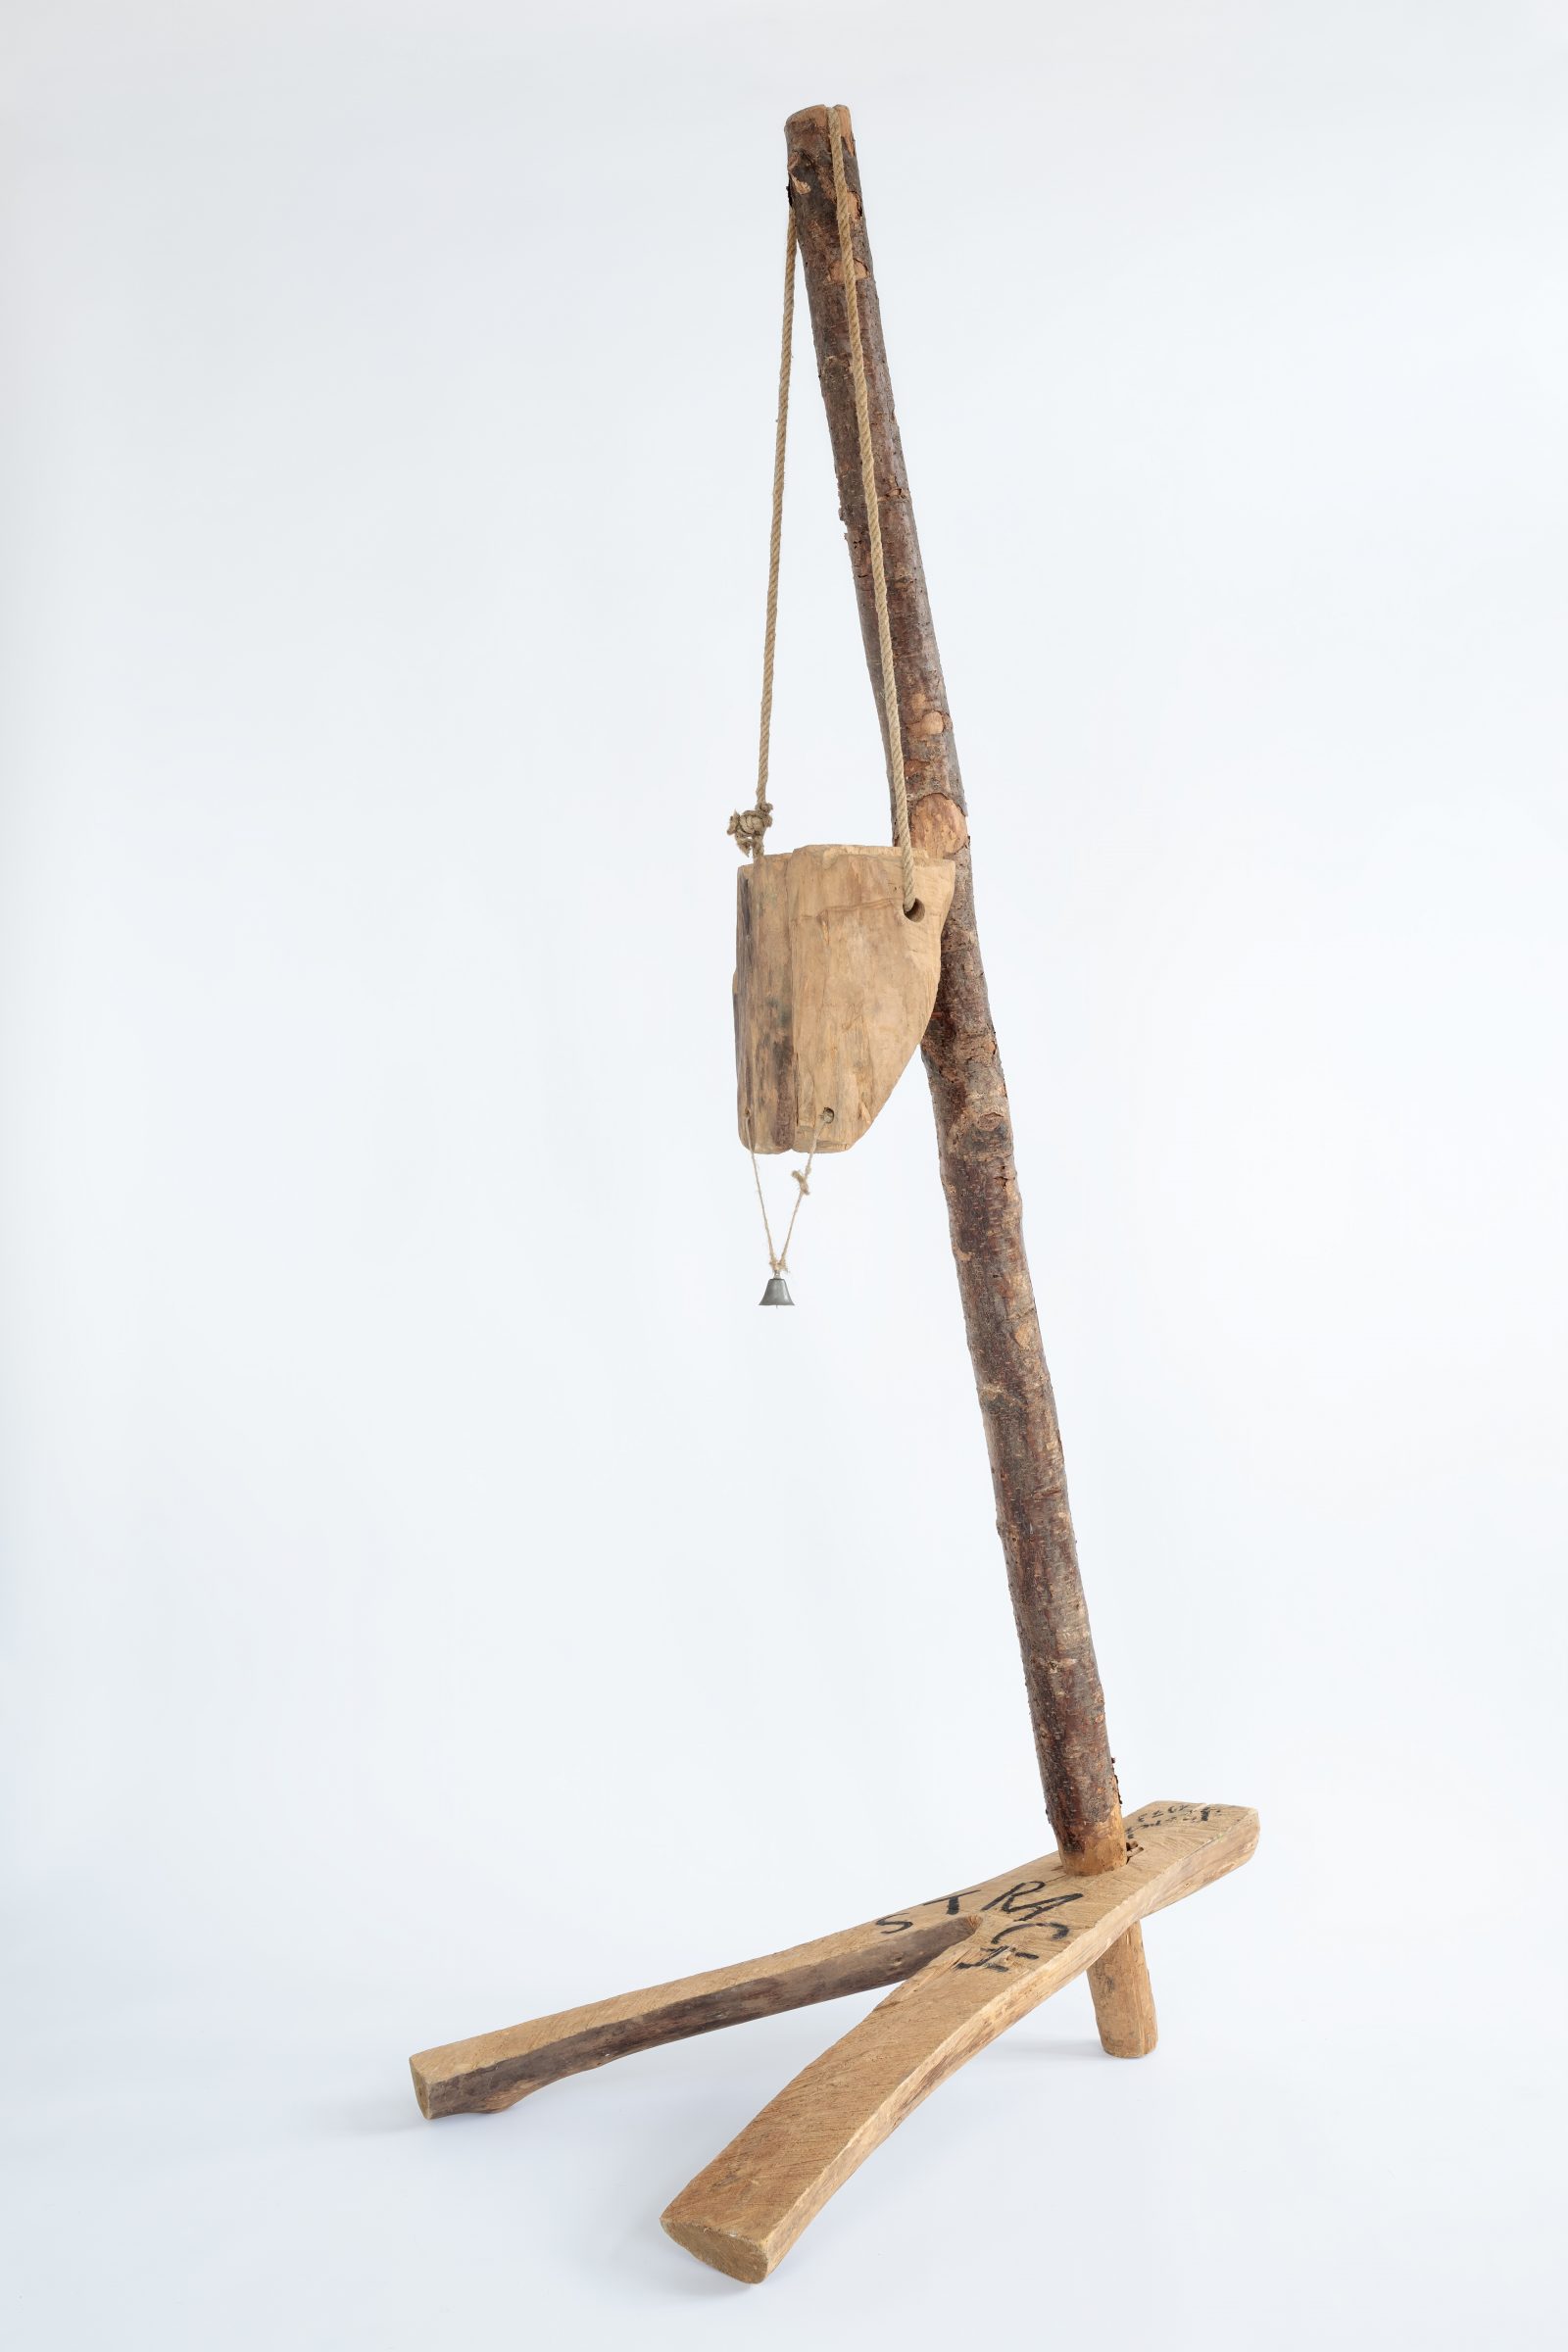 Fear (Strach), 1973
wood, hemp rope, bell, acrylic
216 × 104 × 66 cm